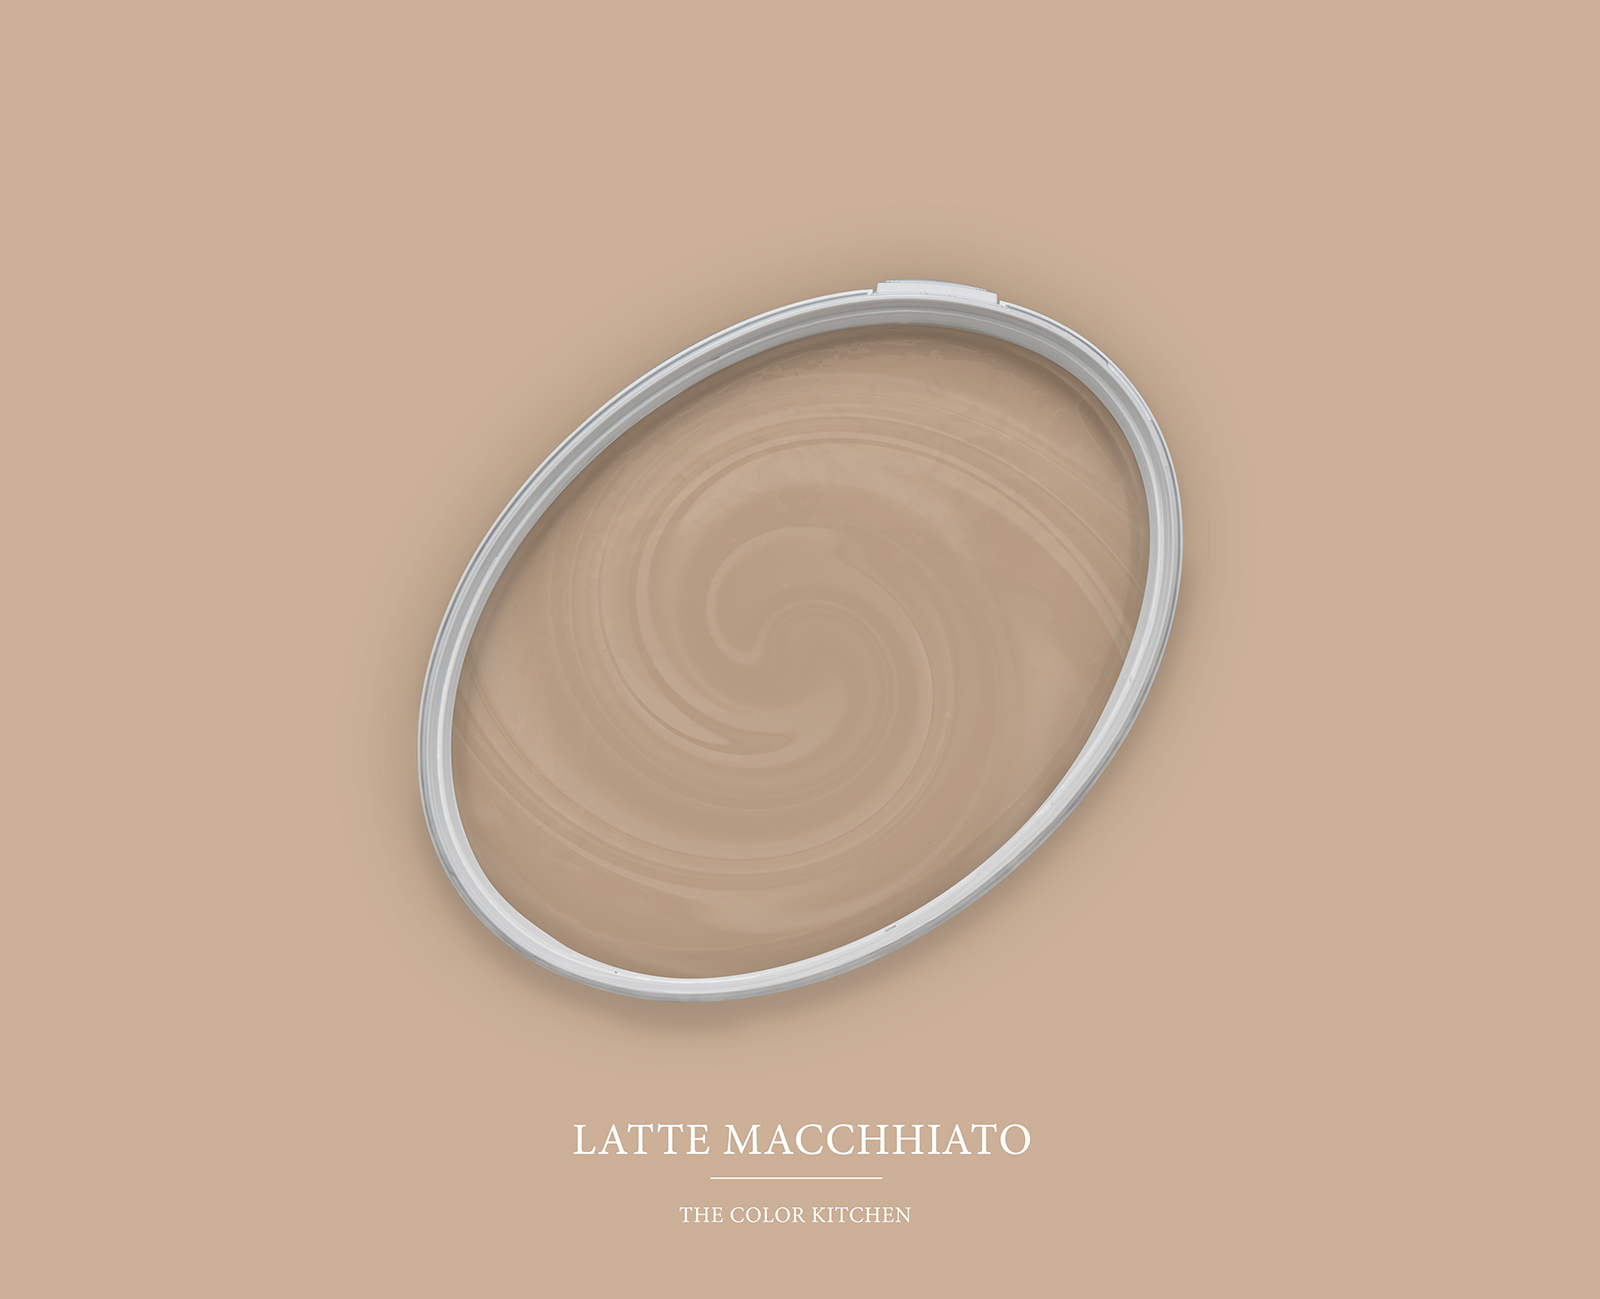 Wall Paint TCK6010 »Latte Macchhiato« in natural beige – 2.5 litre
